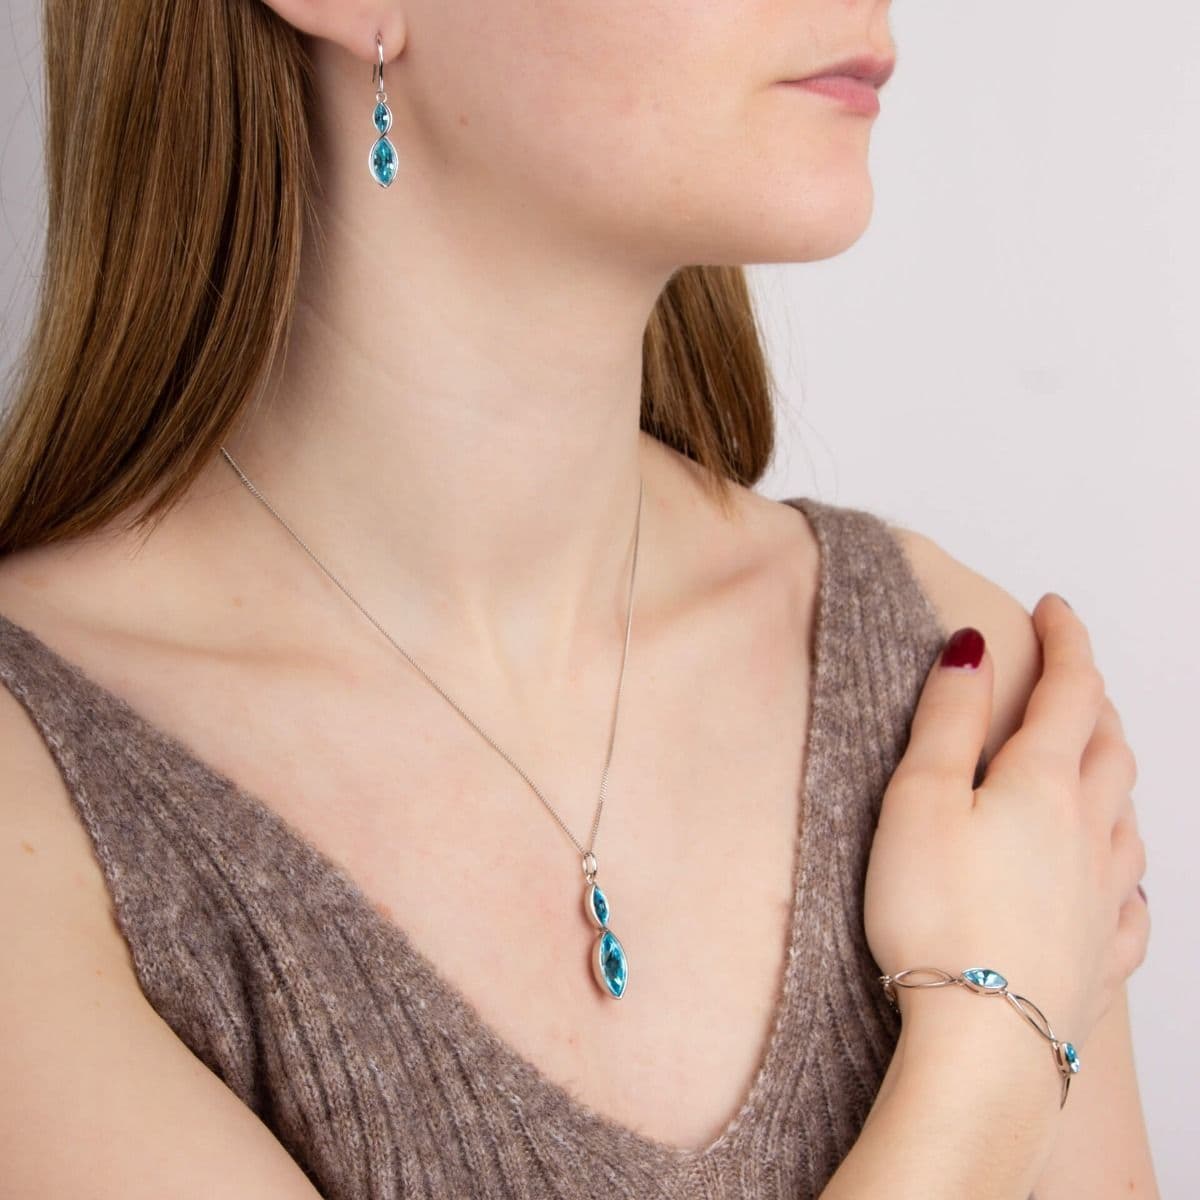 Fiorelli blue coloured crystal double drop earrings